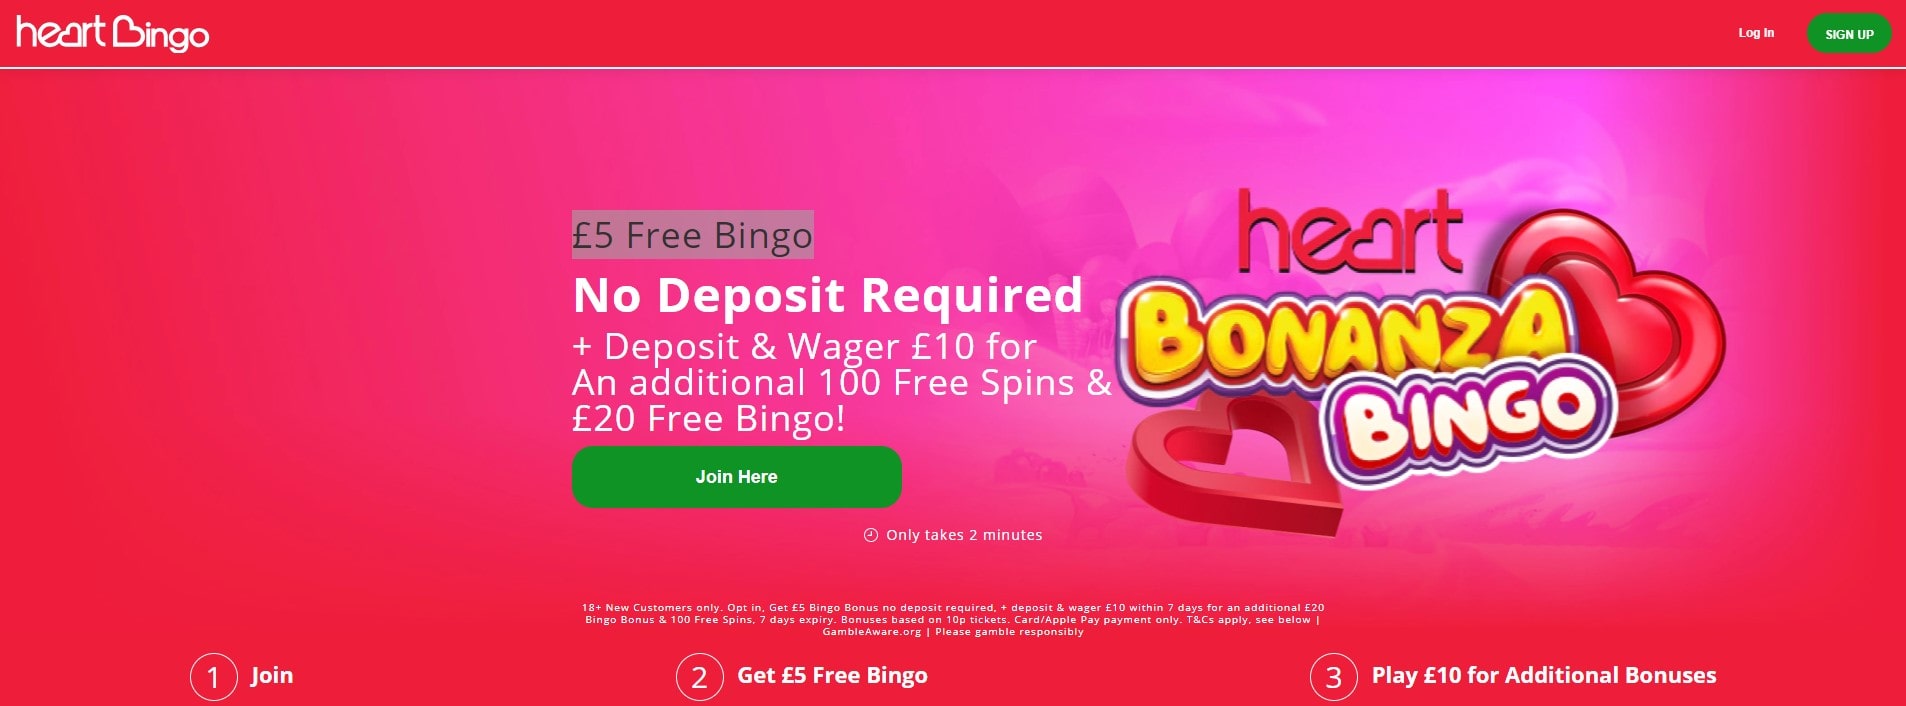 heart bingo free £5 code